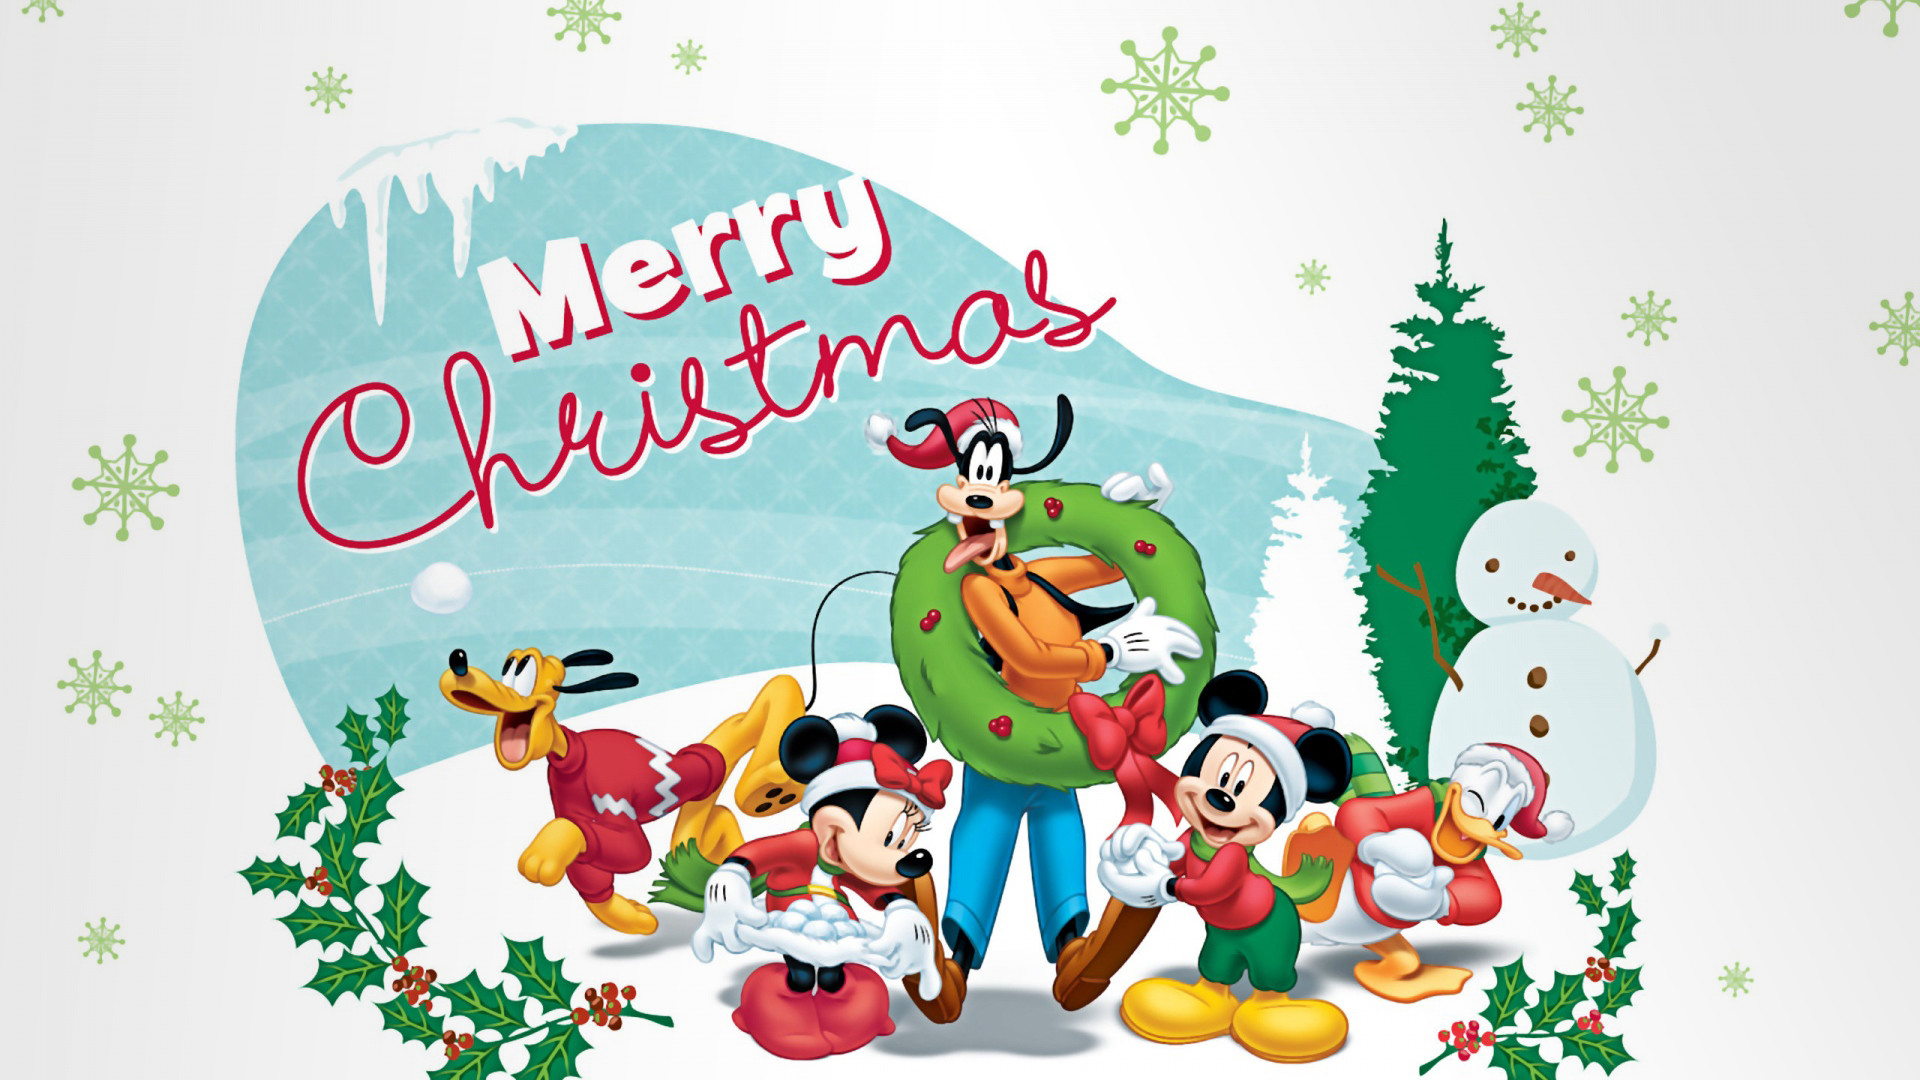 Disney desktop christmas wallpaper – www.wallpapers in hd.com